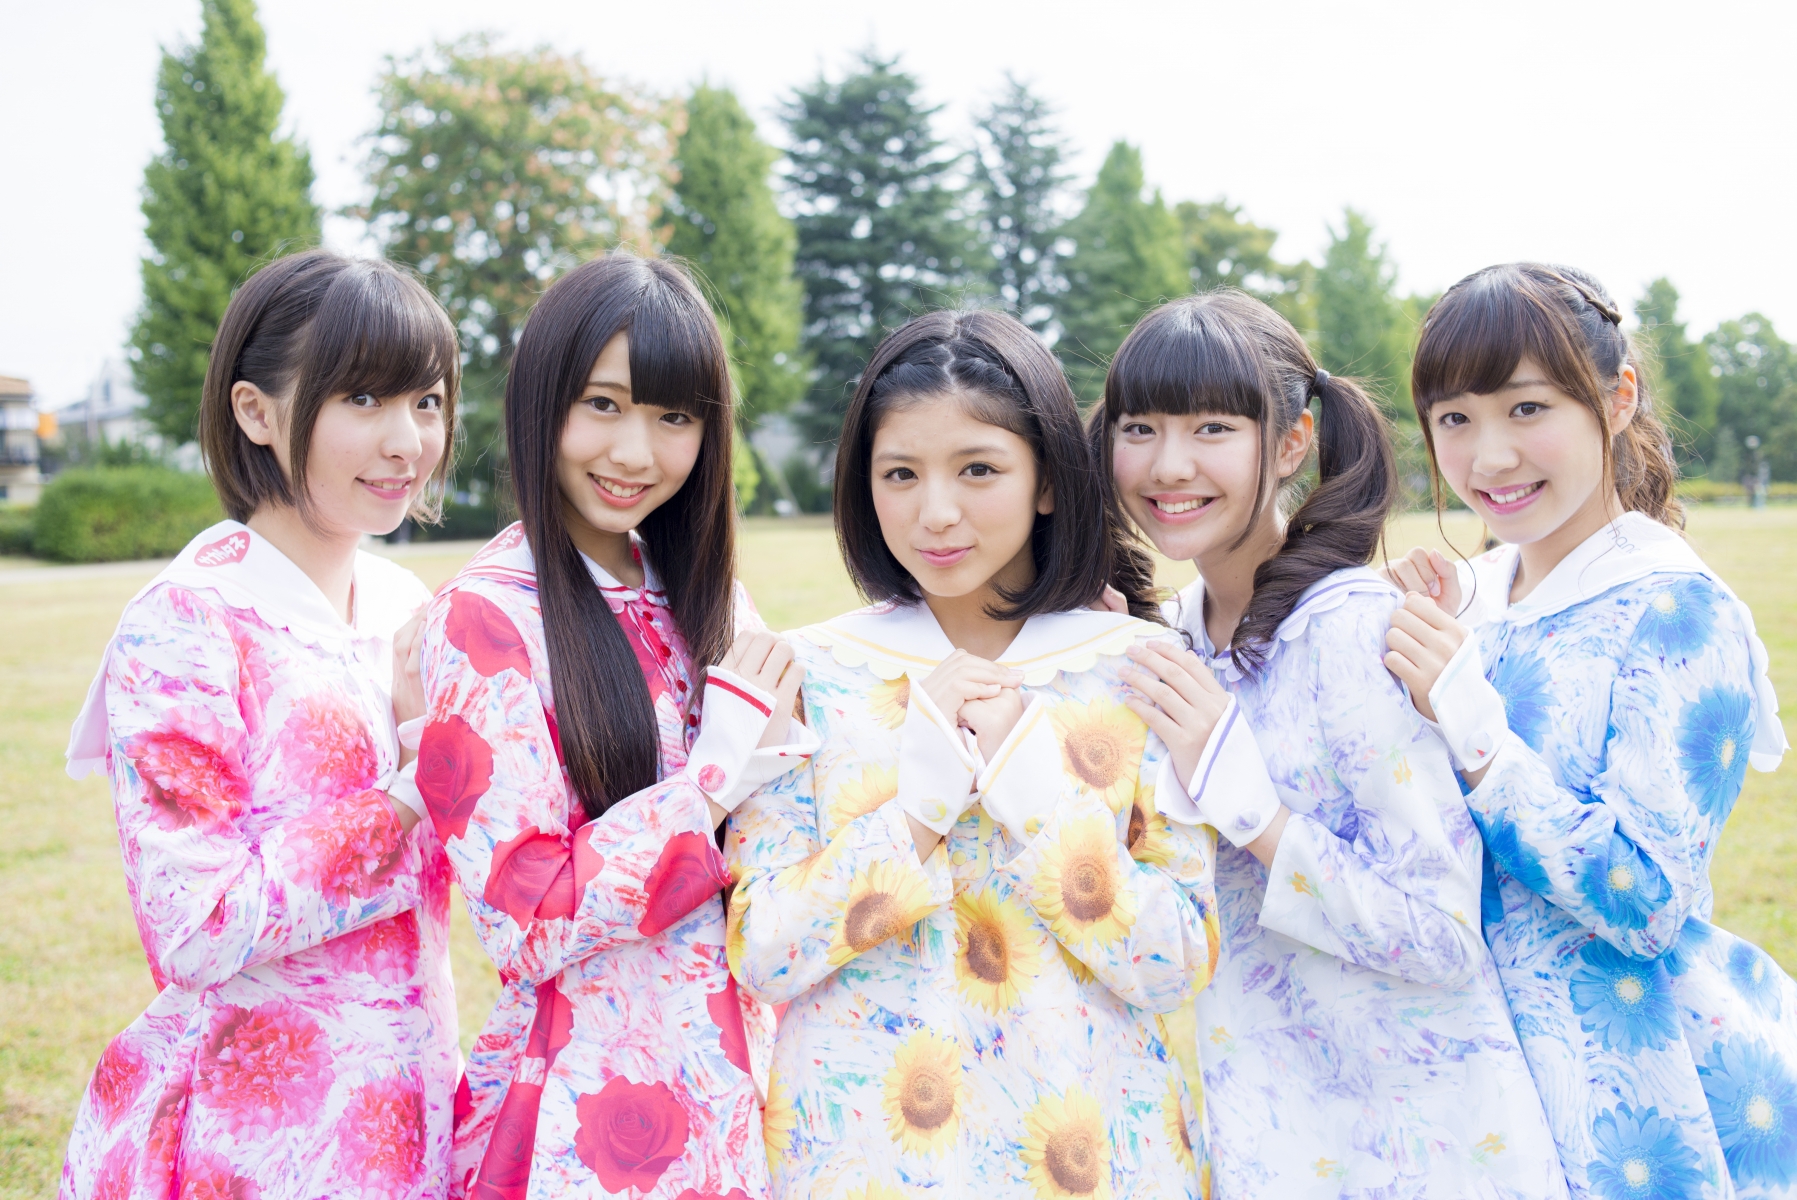 An Idol Song Written by a Comedian? “Attakaindakara” is the Latest Craze in Japan!